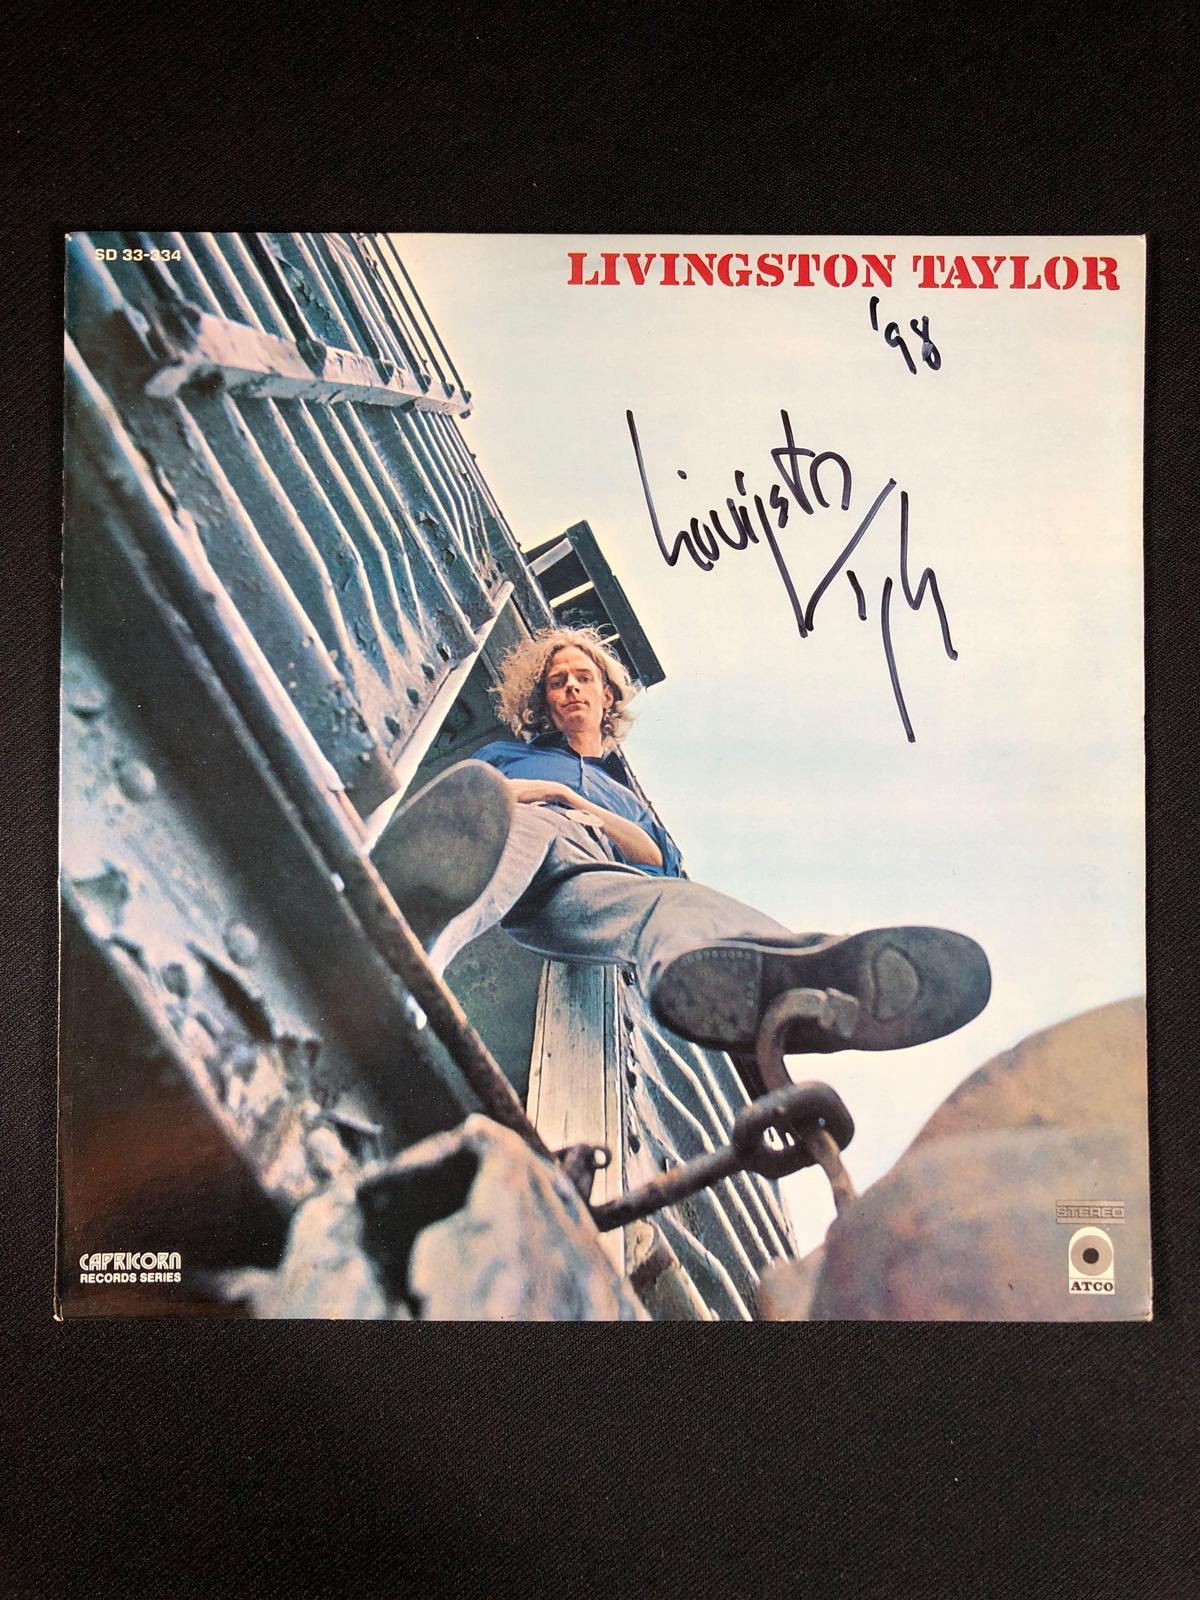 Livingston Taylor Self Titled SD 33-334 Autographed Album 98'